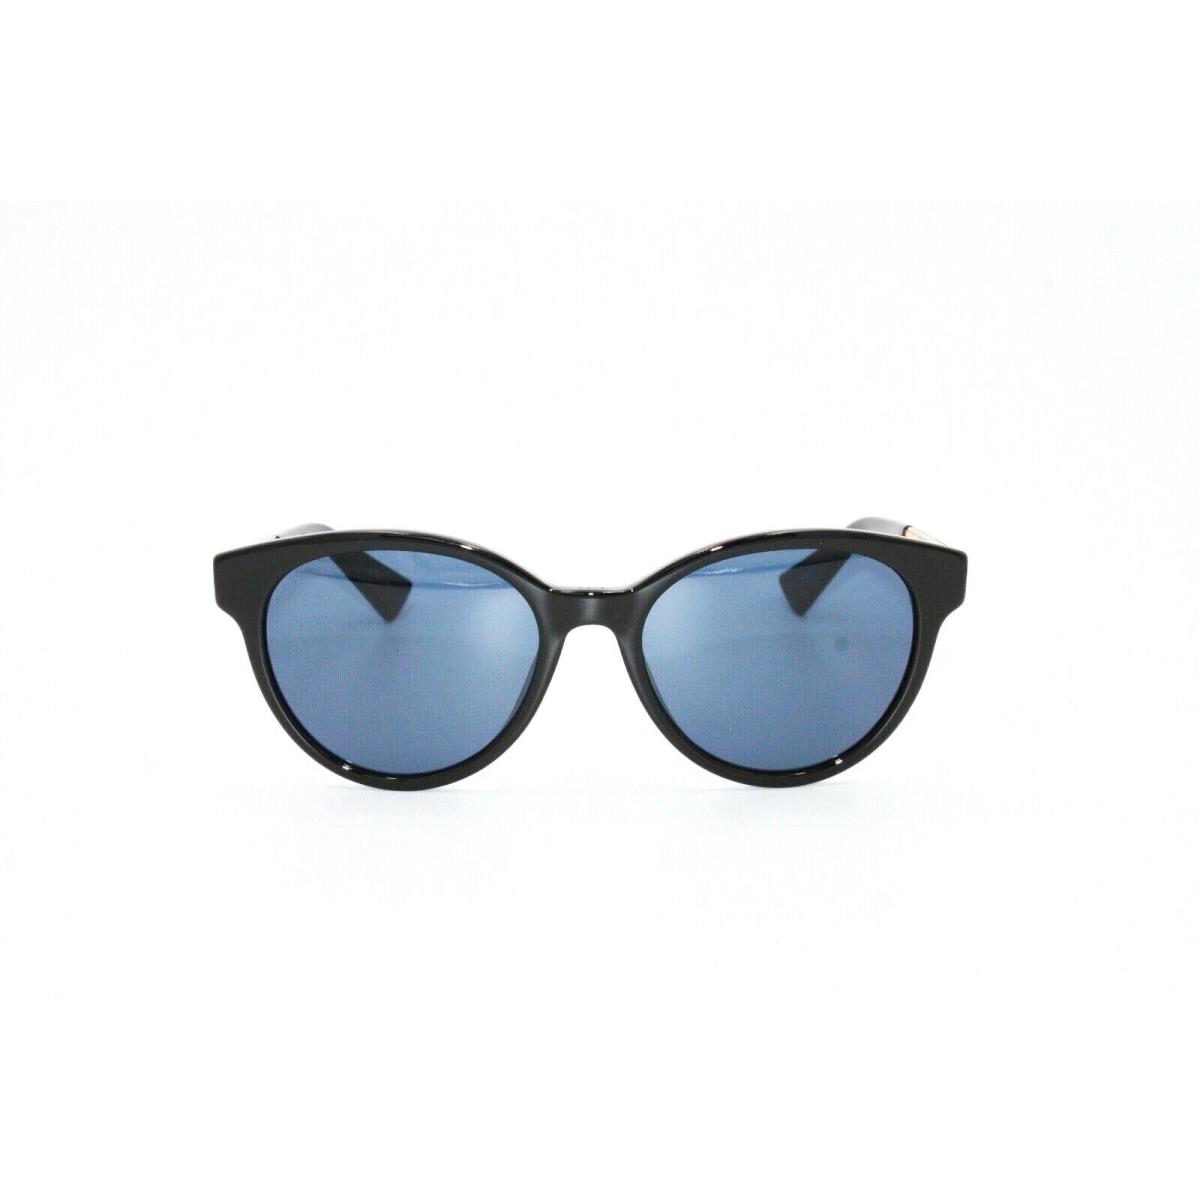 Christian Dior Sunglasses Diorama7 26SKU 52-18 145 WF107BQBBF Made in Italy